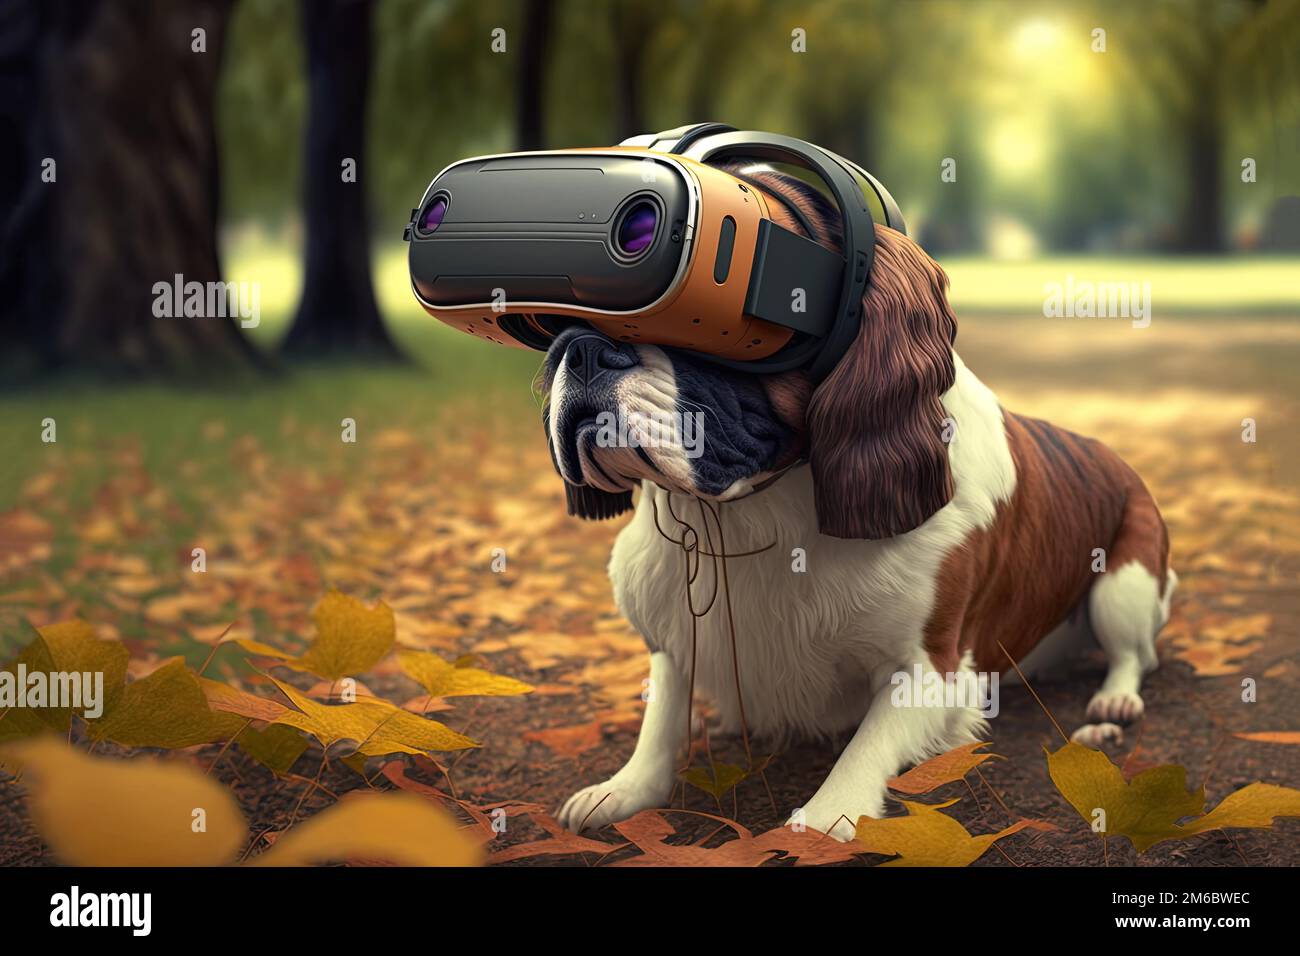 Hund trägt ein VR Virtual Reality-Headset Stockfotografie - Alamy